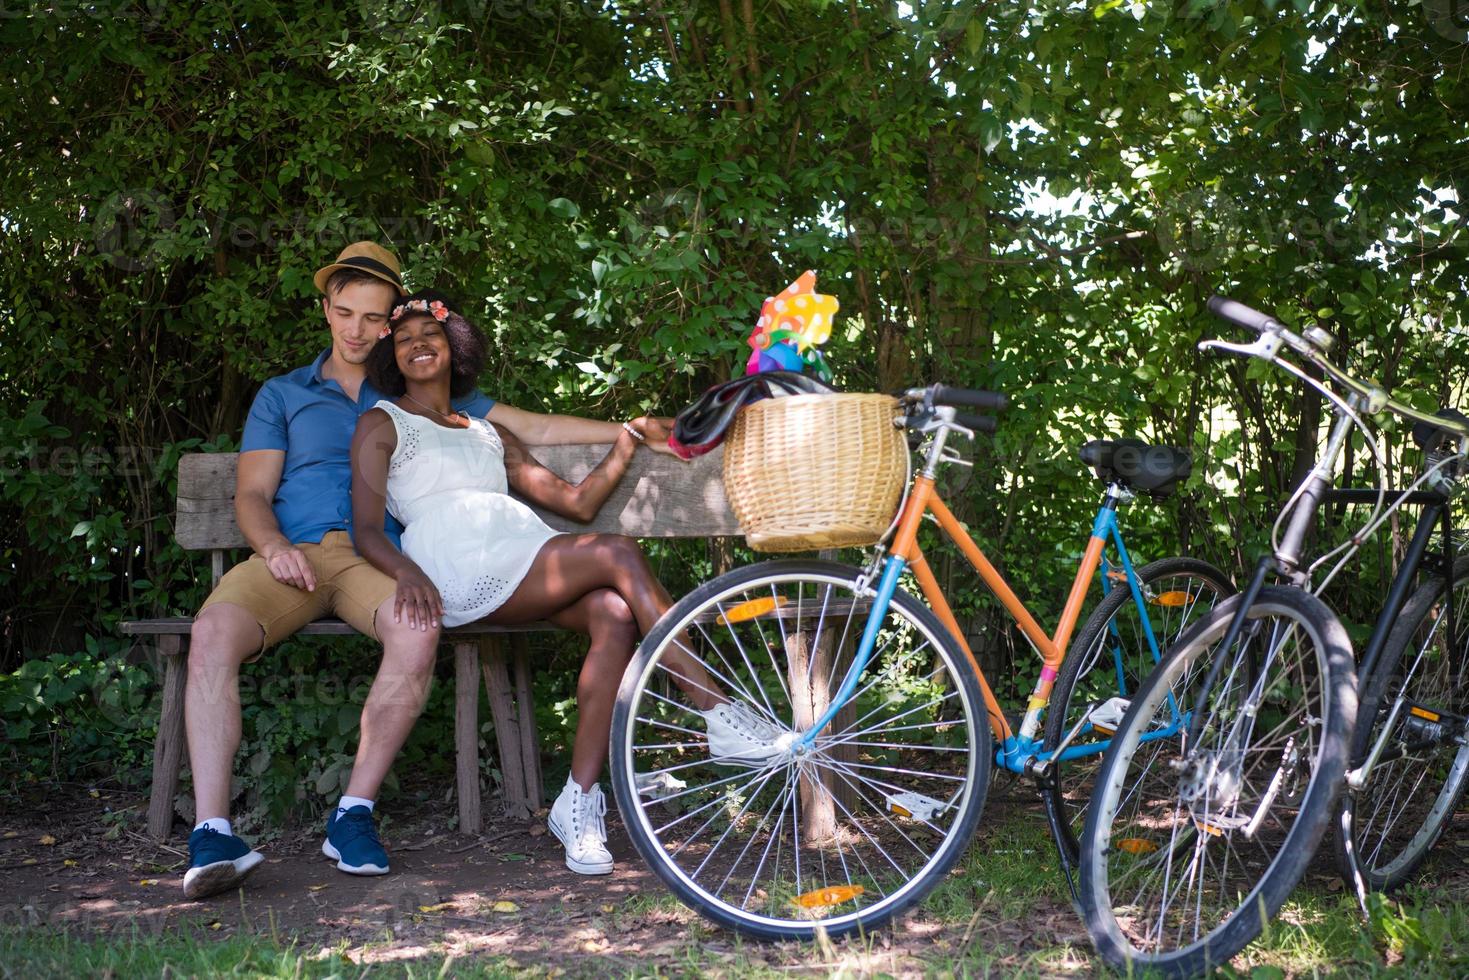 joven pareja multiétnica dando un paseo en bicicleta en la naturaleza foto